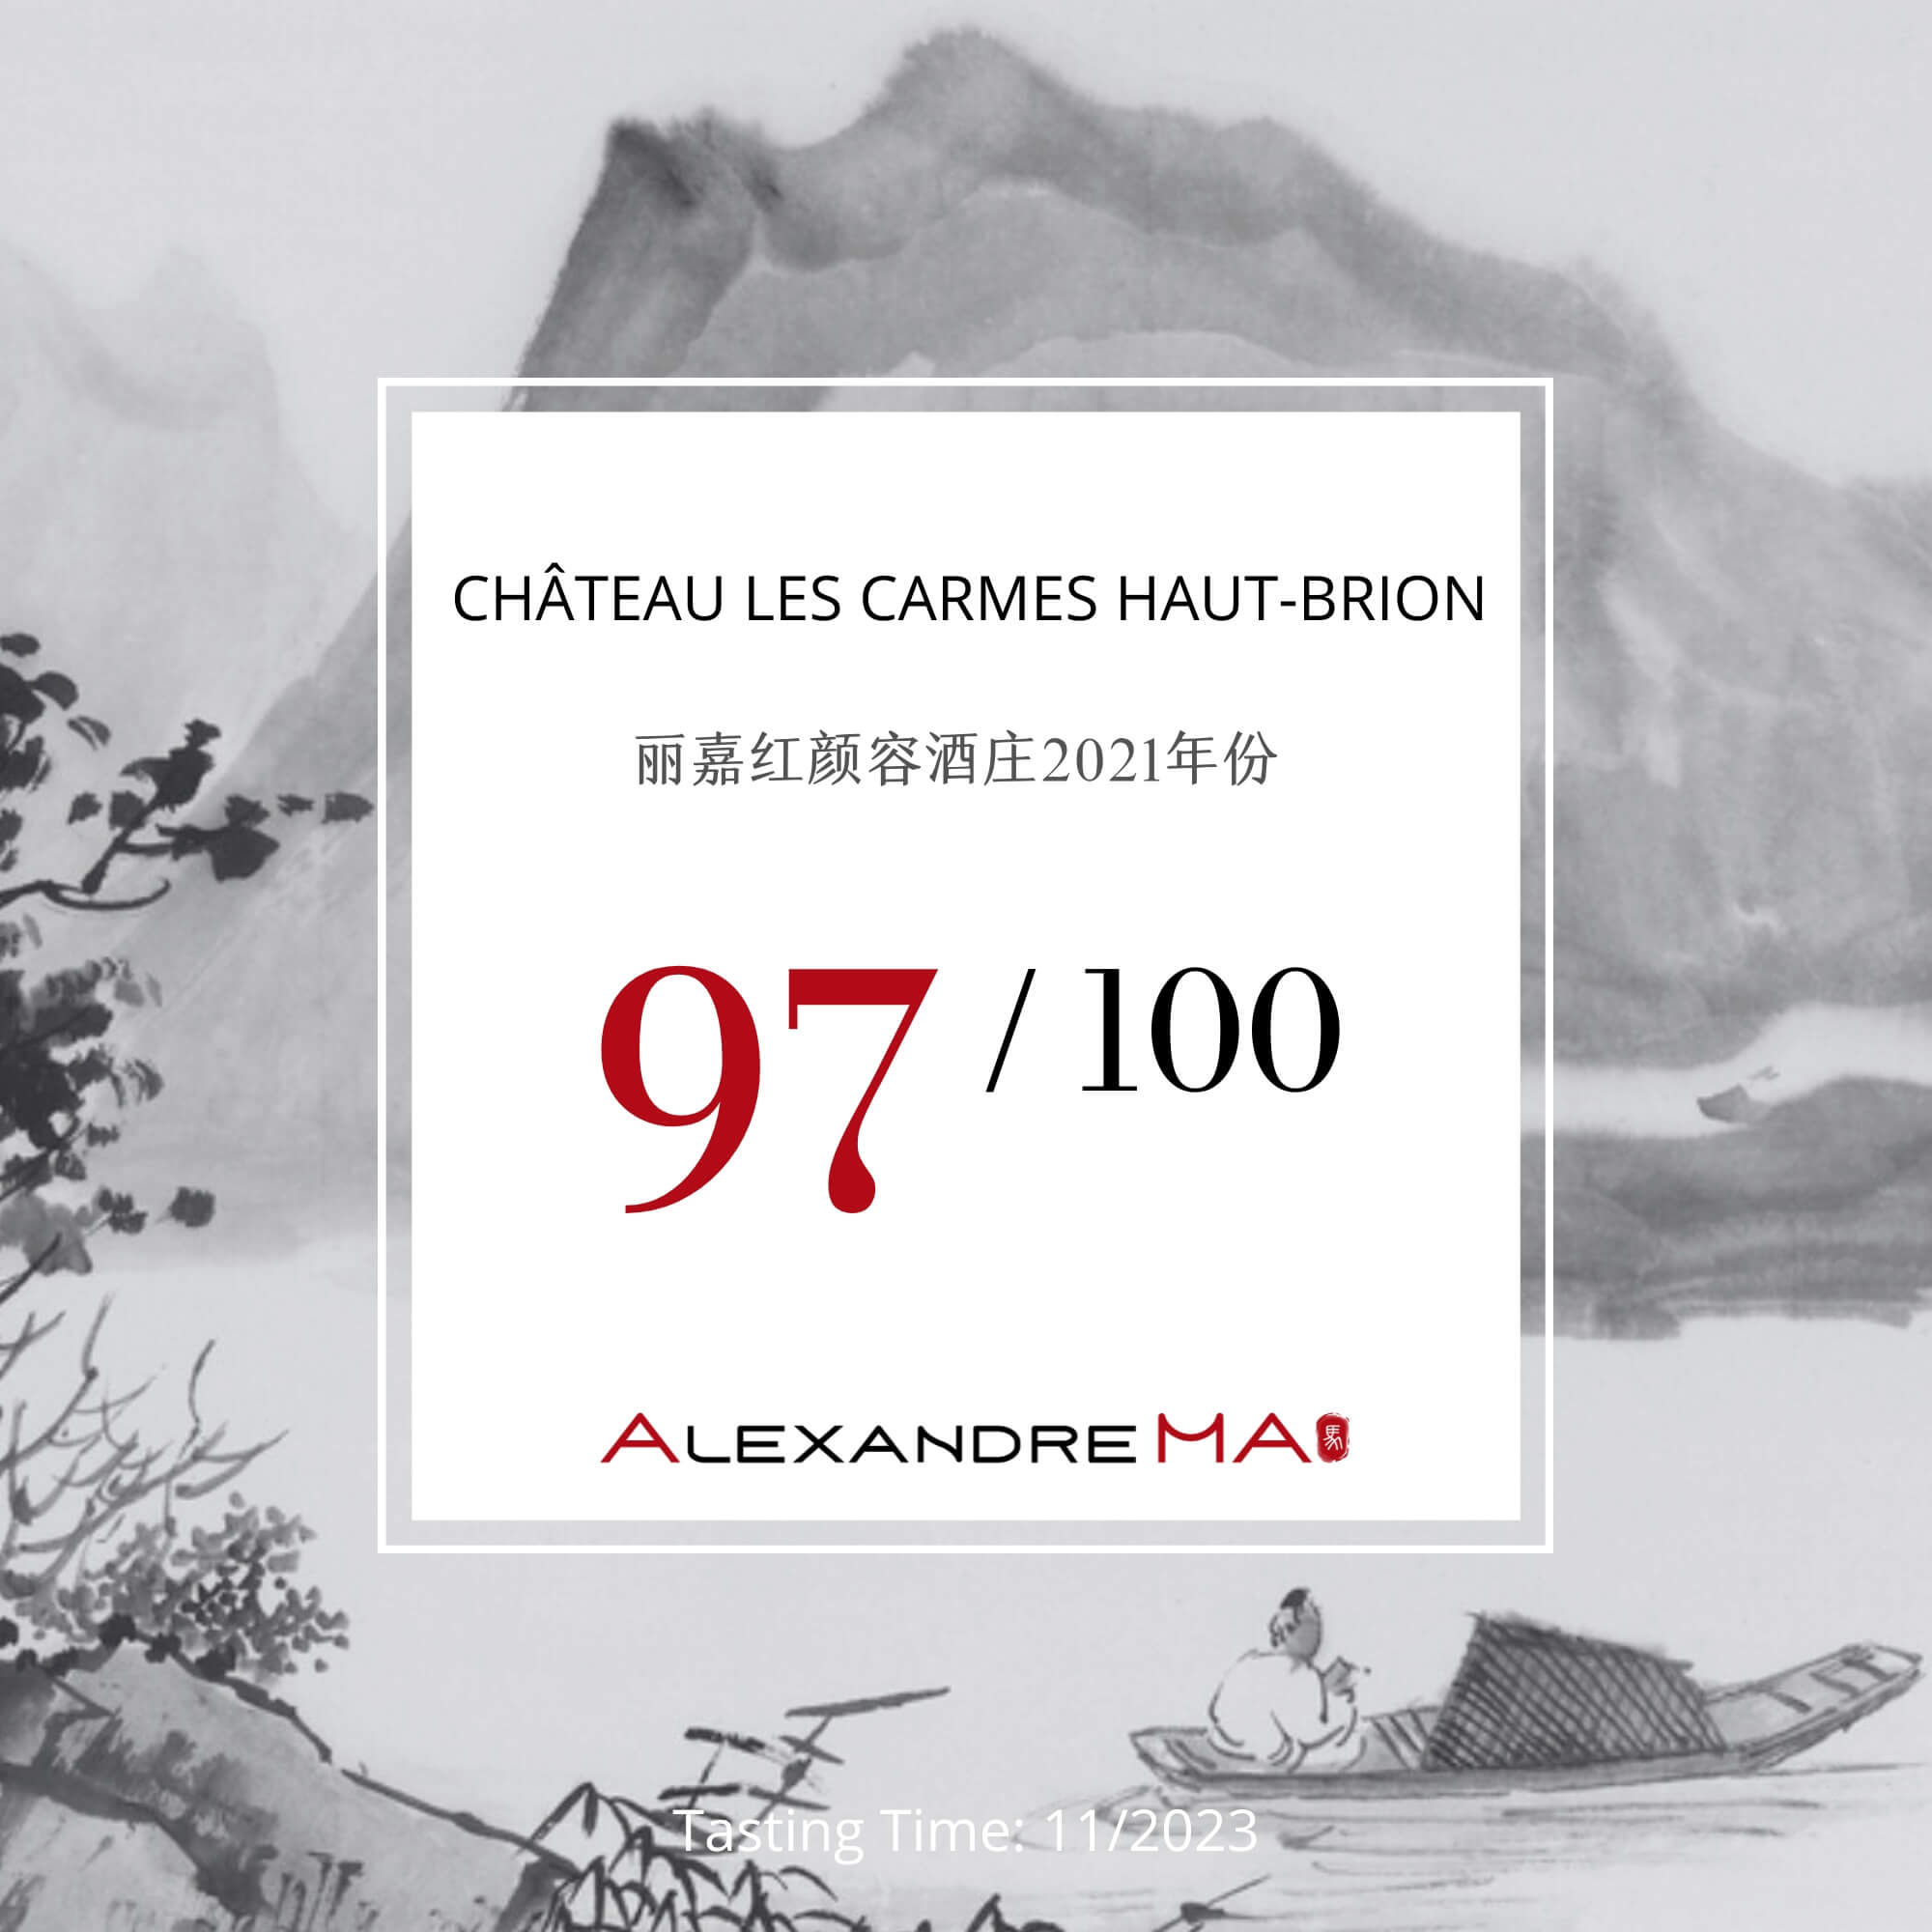 Château Les Carmes Haut-Brion 2021 丽嘉红颜容酒庄 - Alexandre Ma